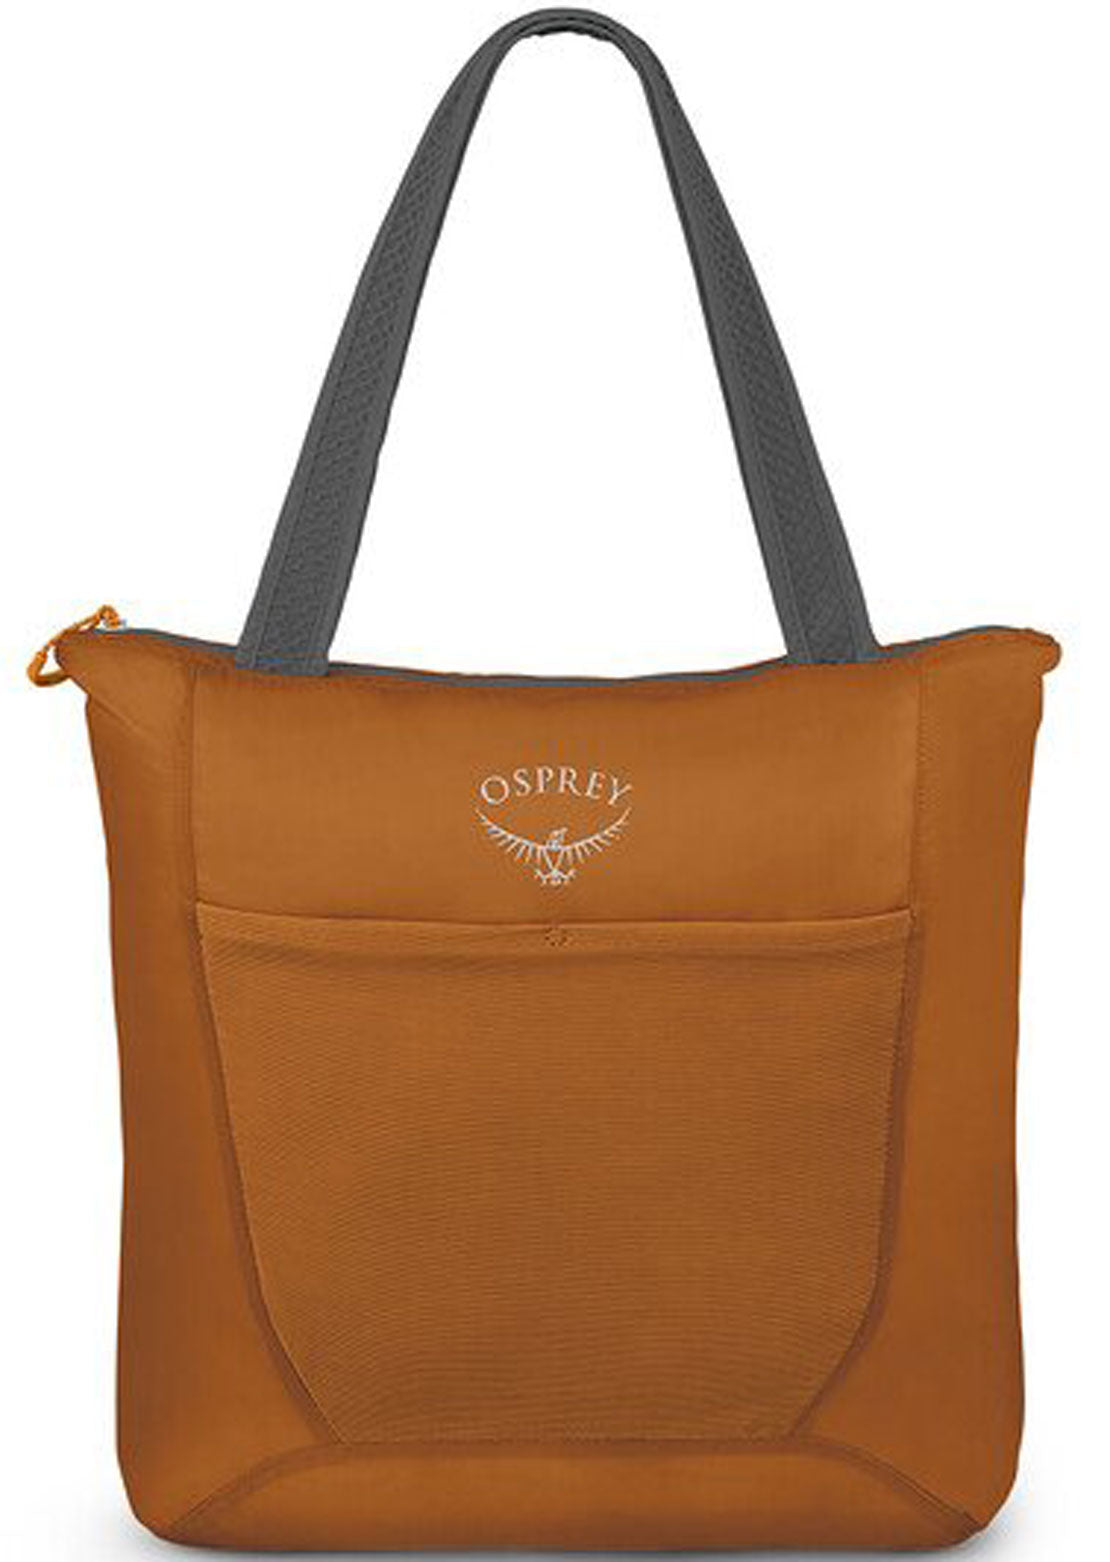 Osprey Ultralight Stuff Tote Bag Toffee Orange